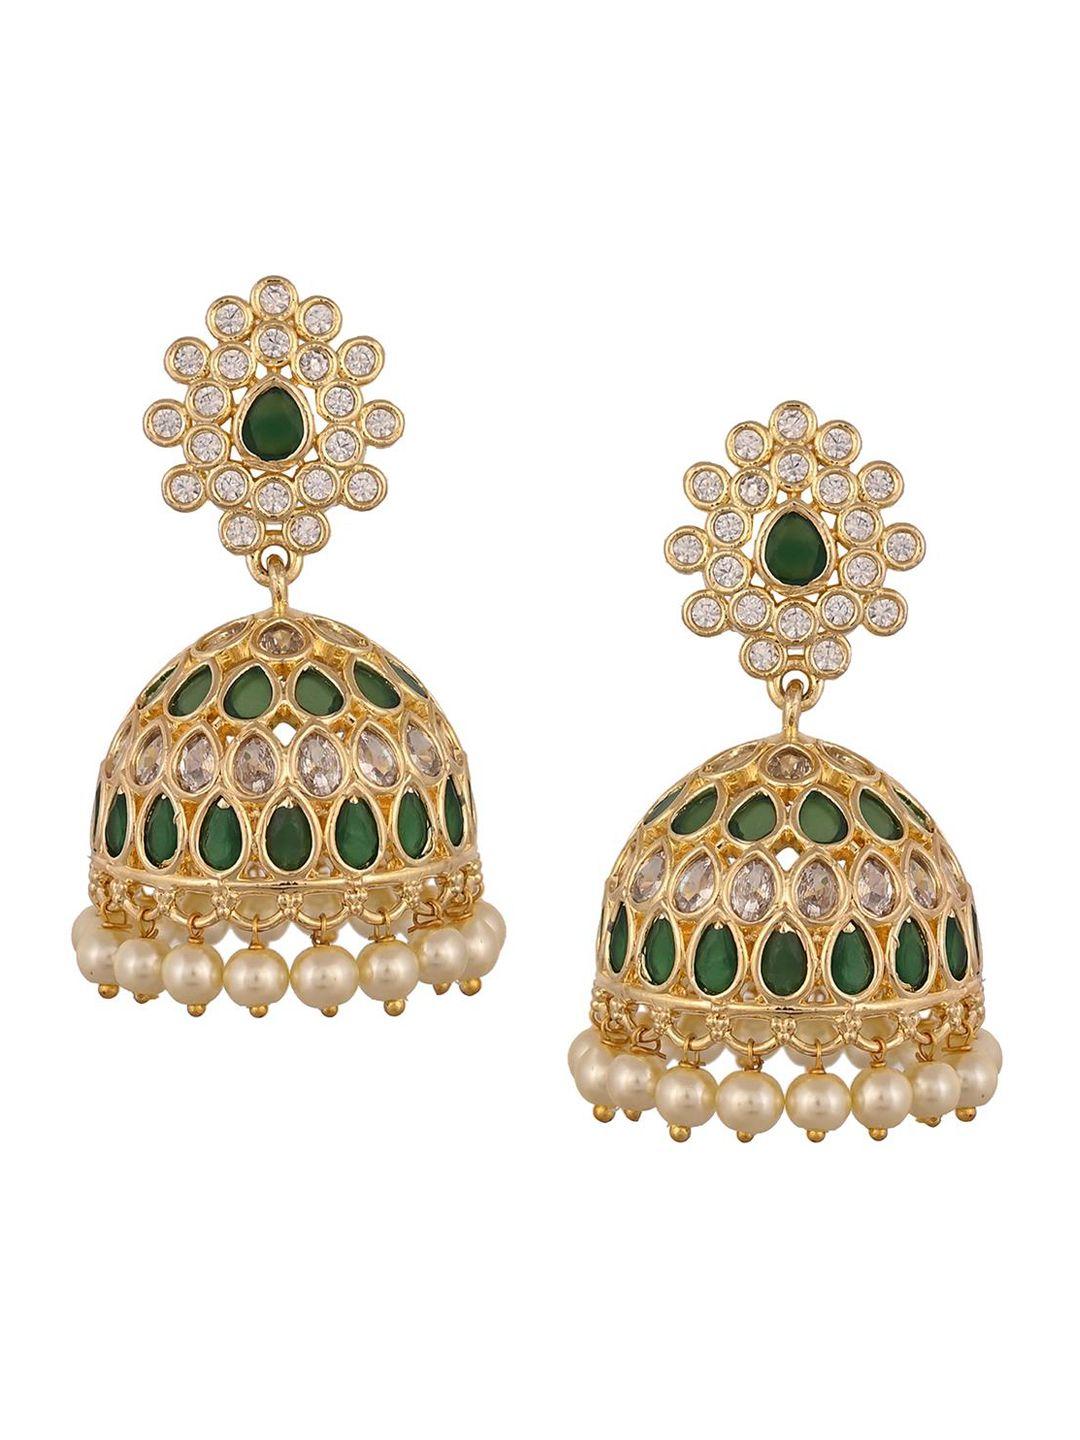 ratnavali jewels gold-plated domed shaped jhumkas